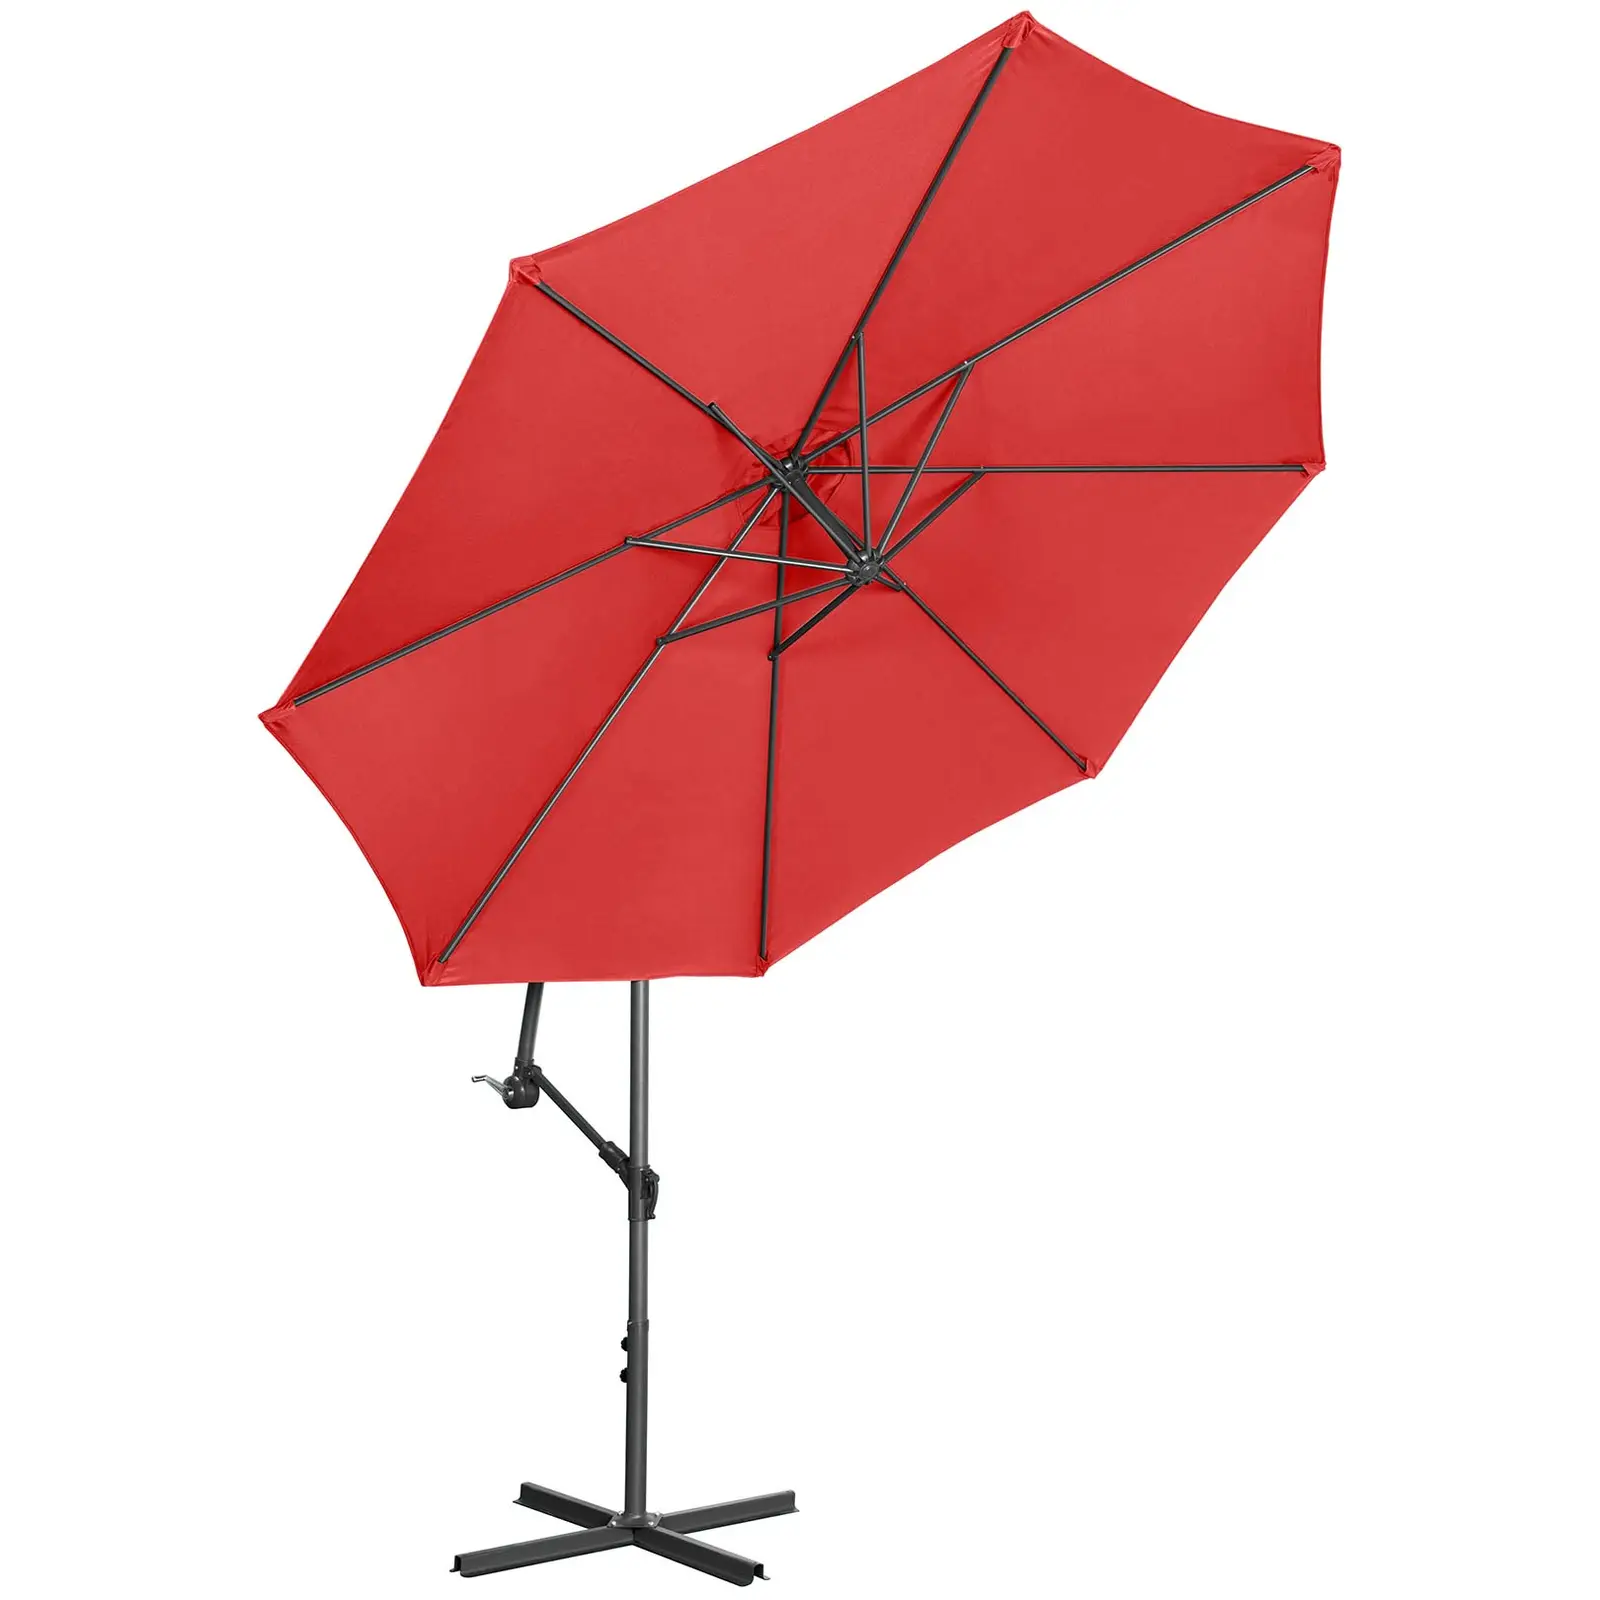 B-varer Hageparaply - rød - rund - Ø 300 cm - vippbar